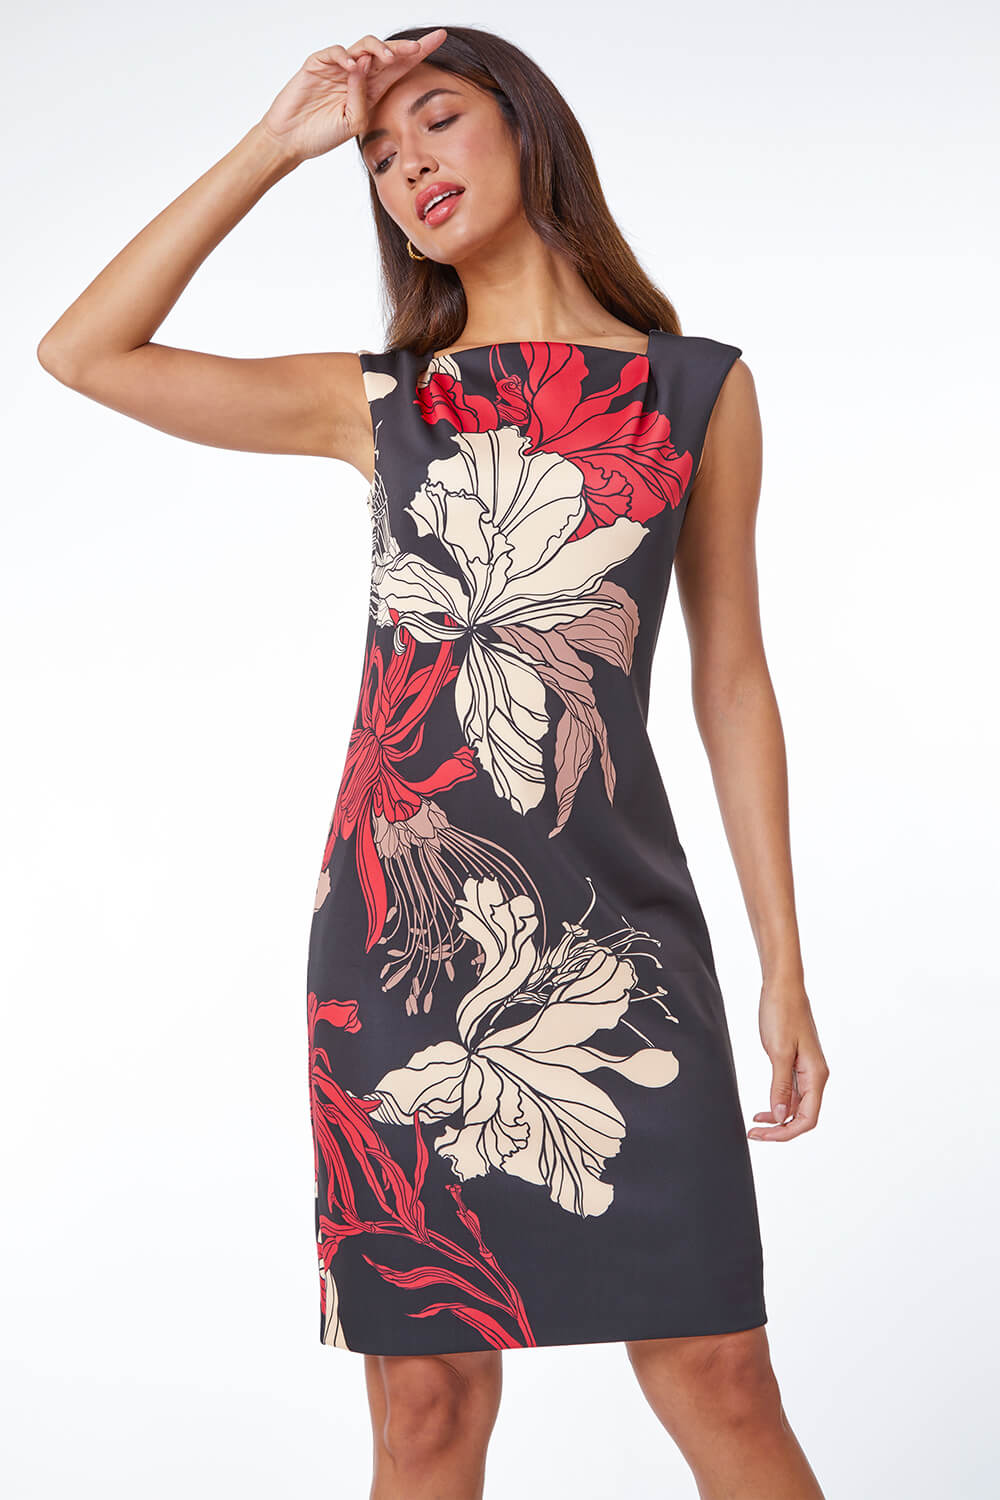 Floral Premium Stretch Dress in Red - Roman Originals UK